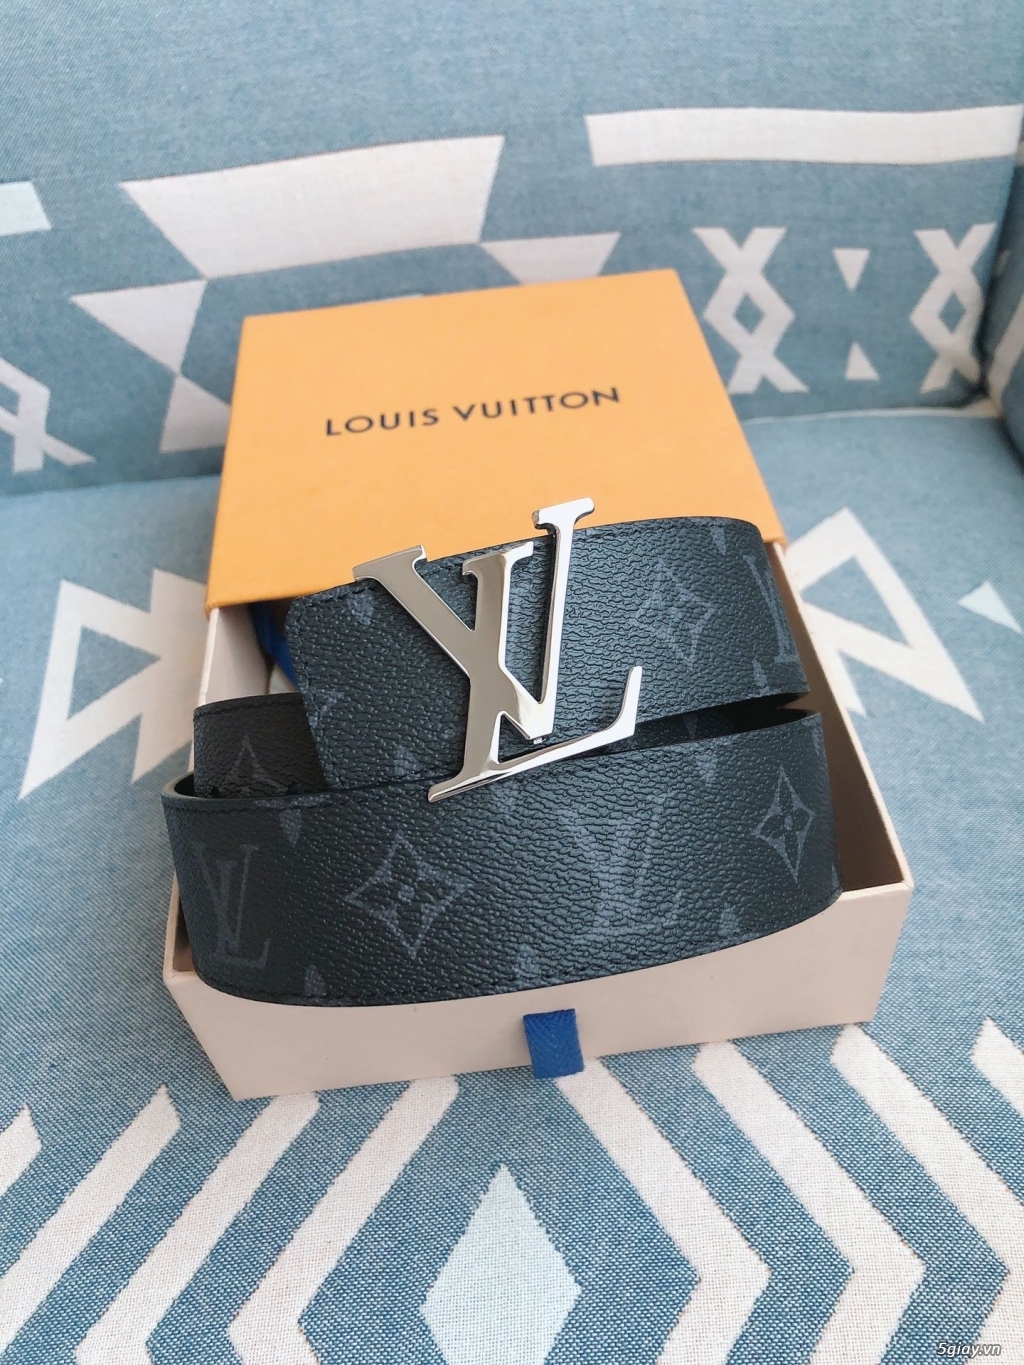 Dây nịt Louis Vuitton hàng fake order ko có sẵn - 18